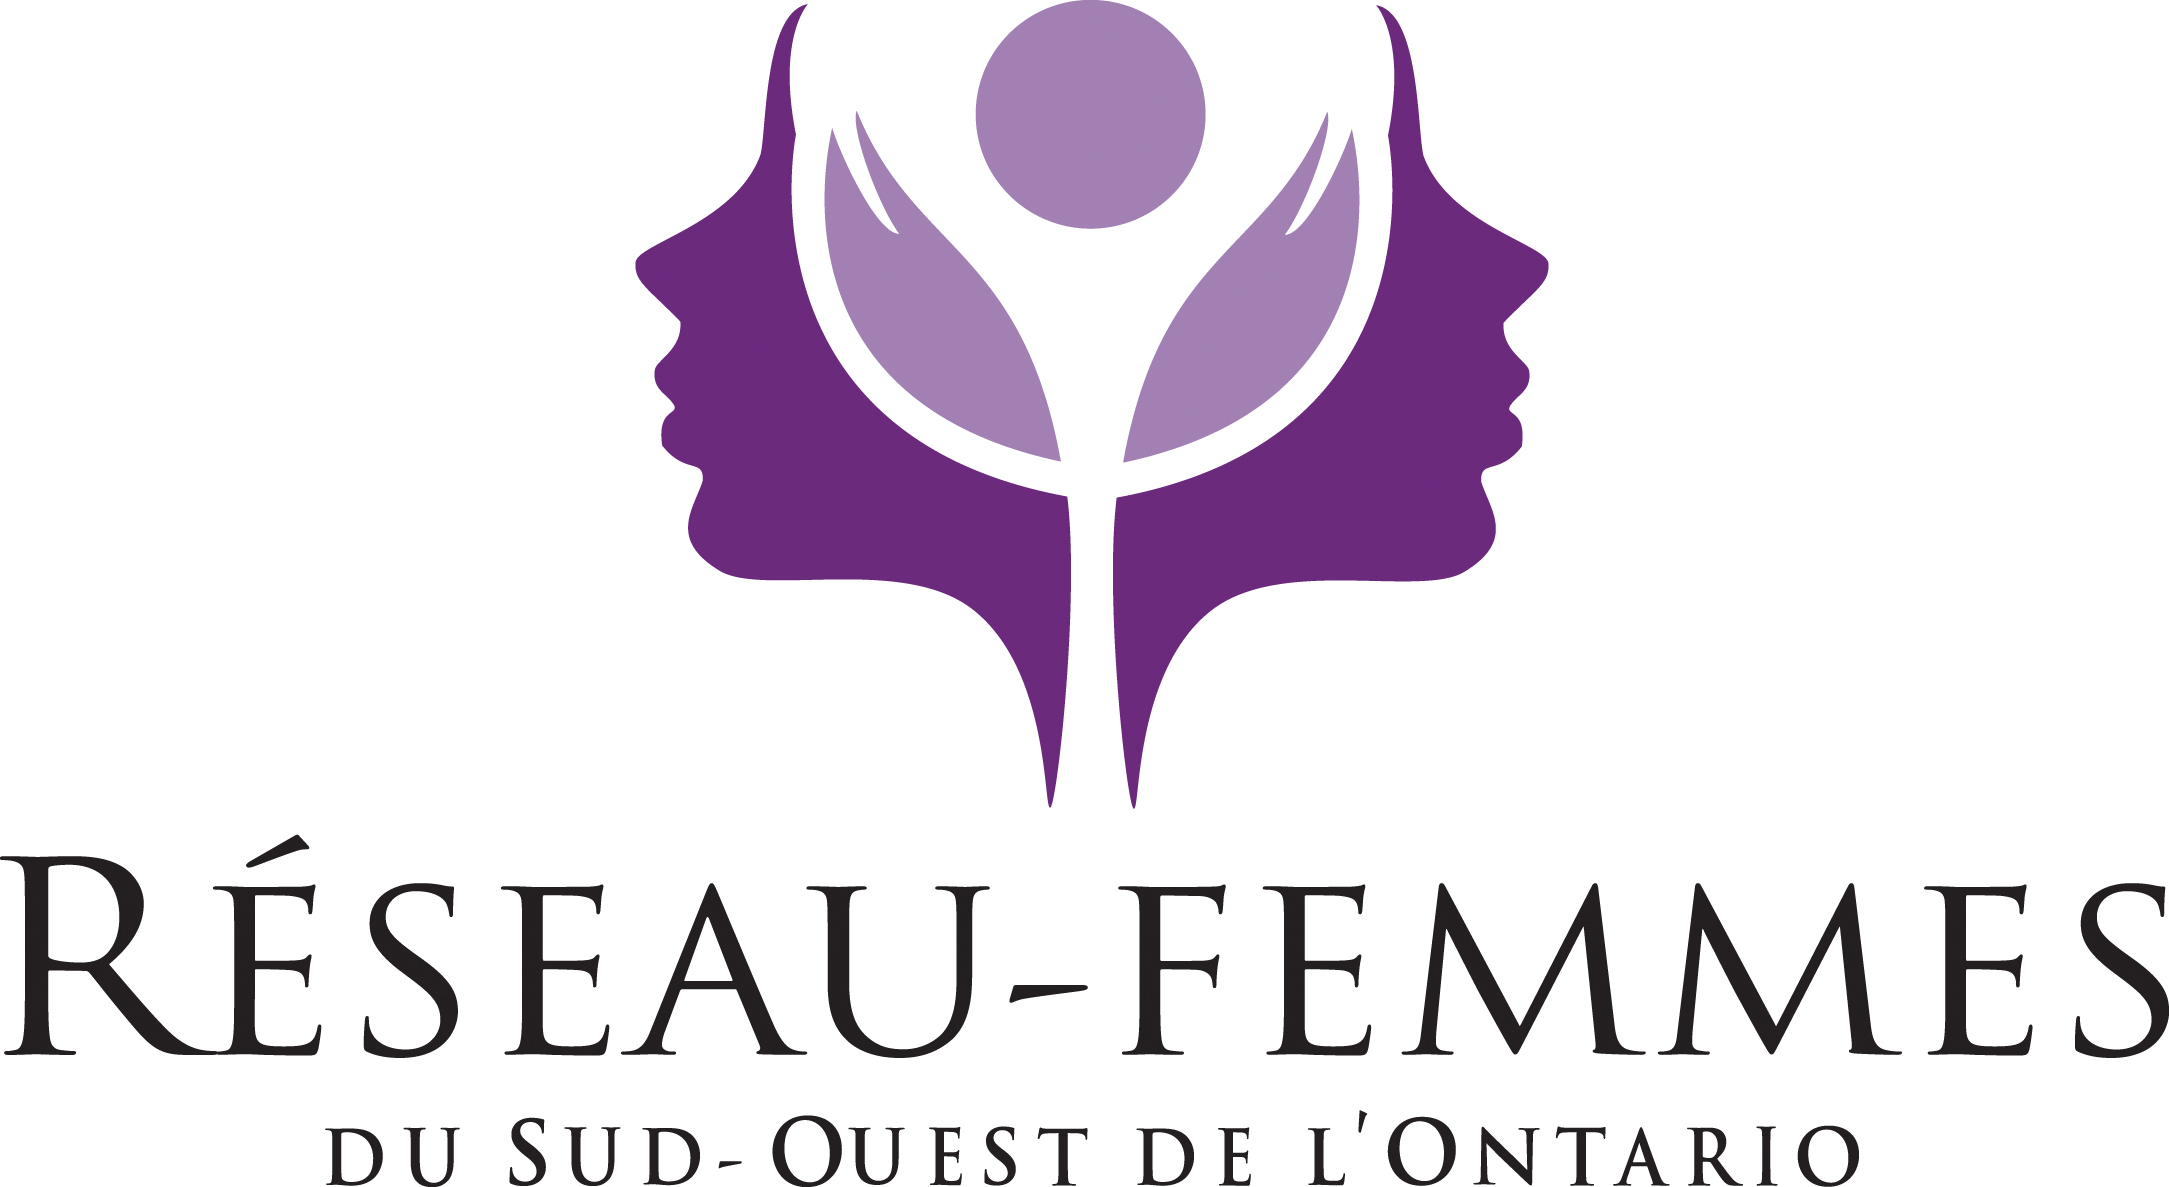 Reseau-Femmes Logo.jpg